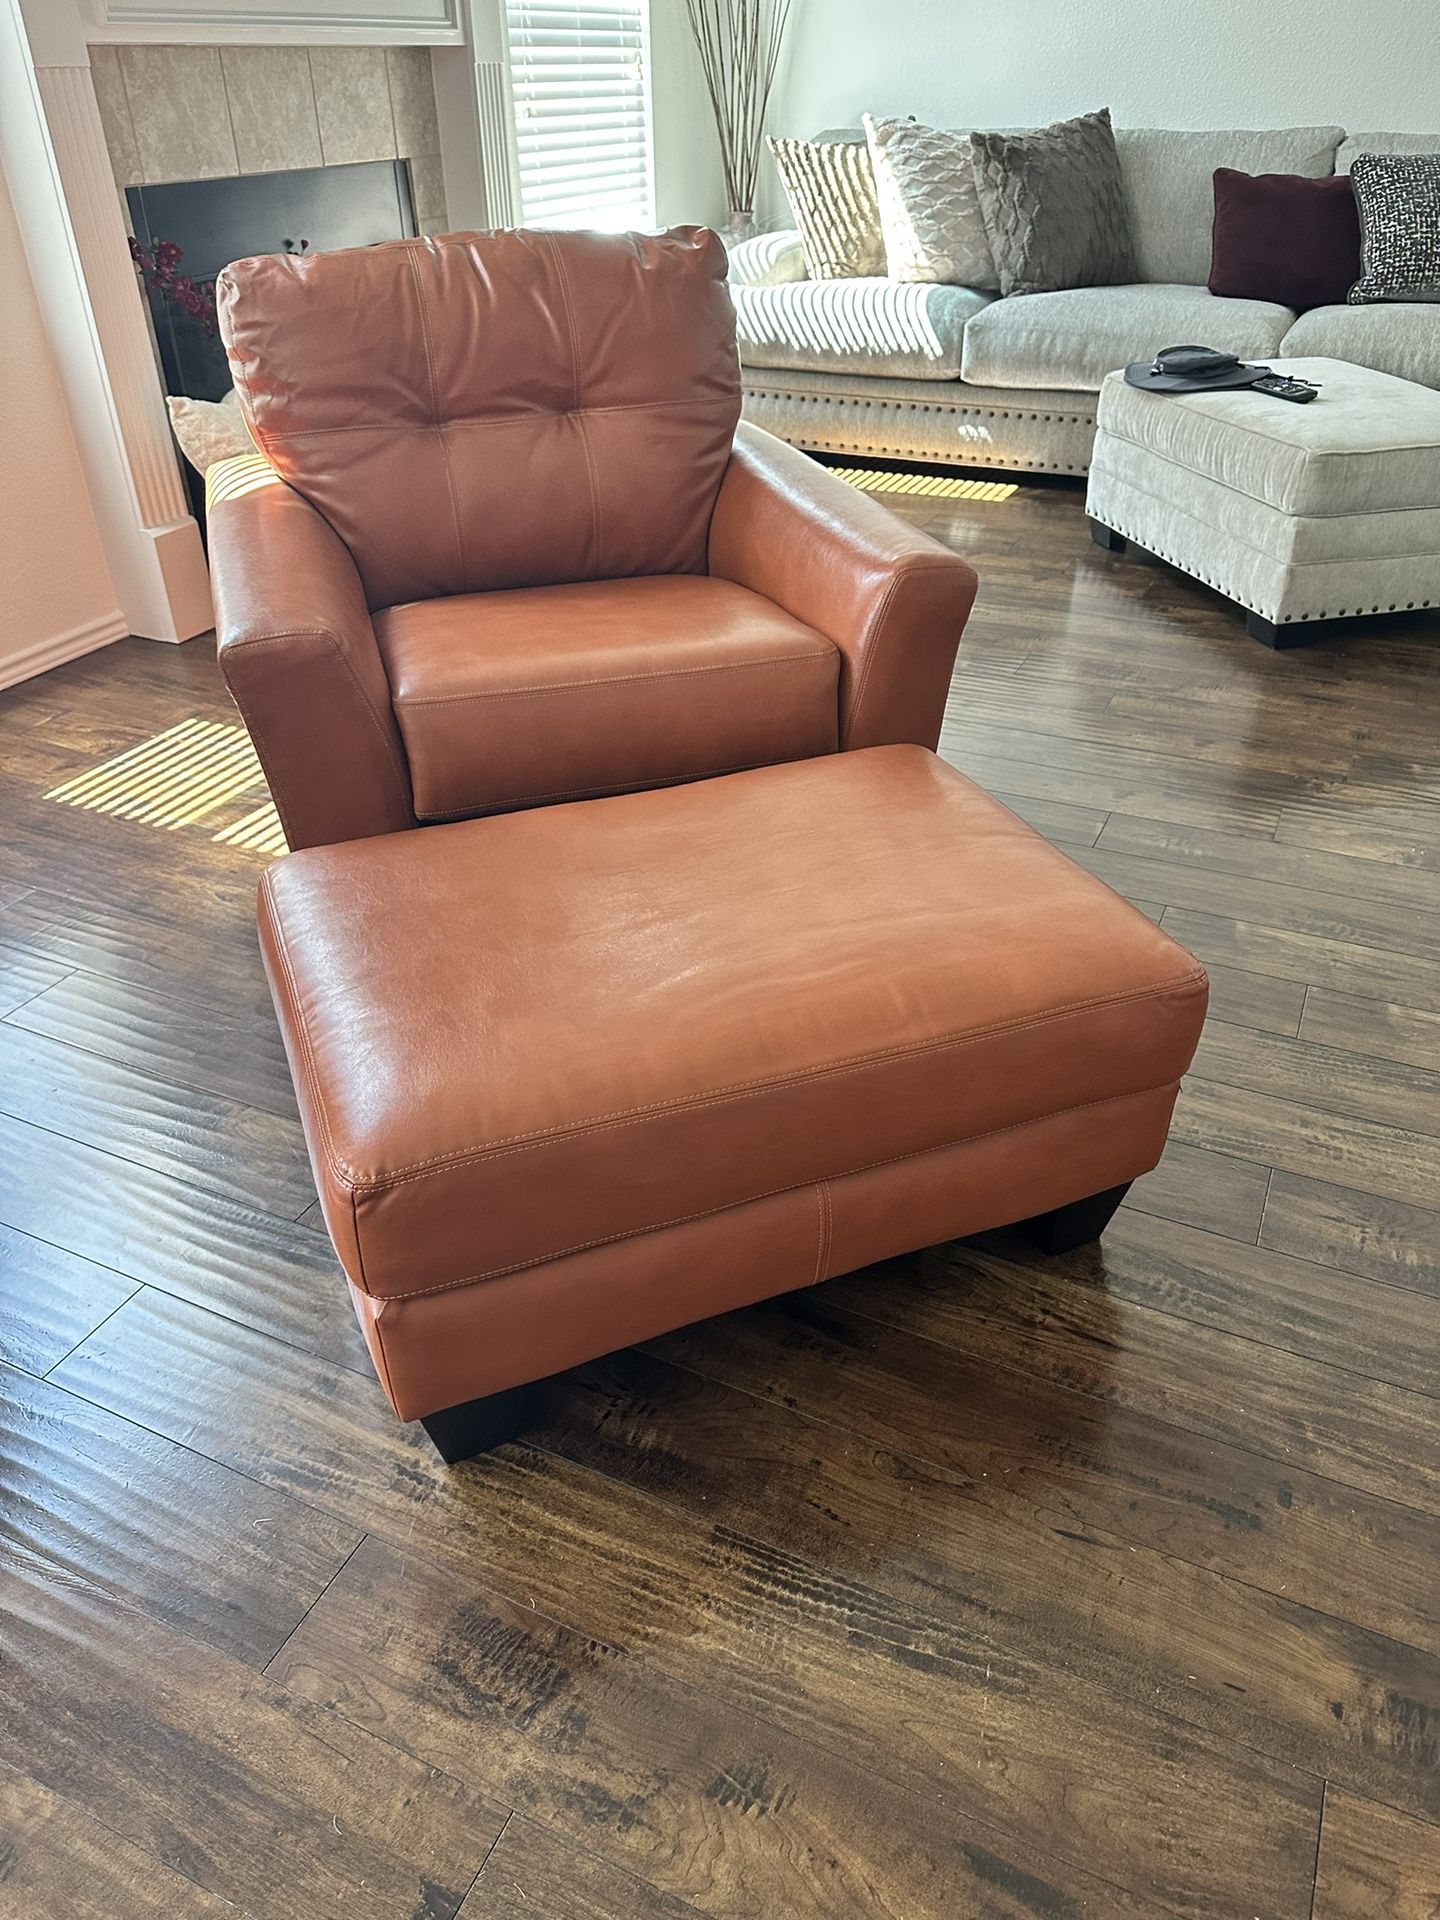 Beautiful Orange Chair and Ottoman